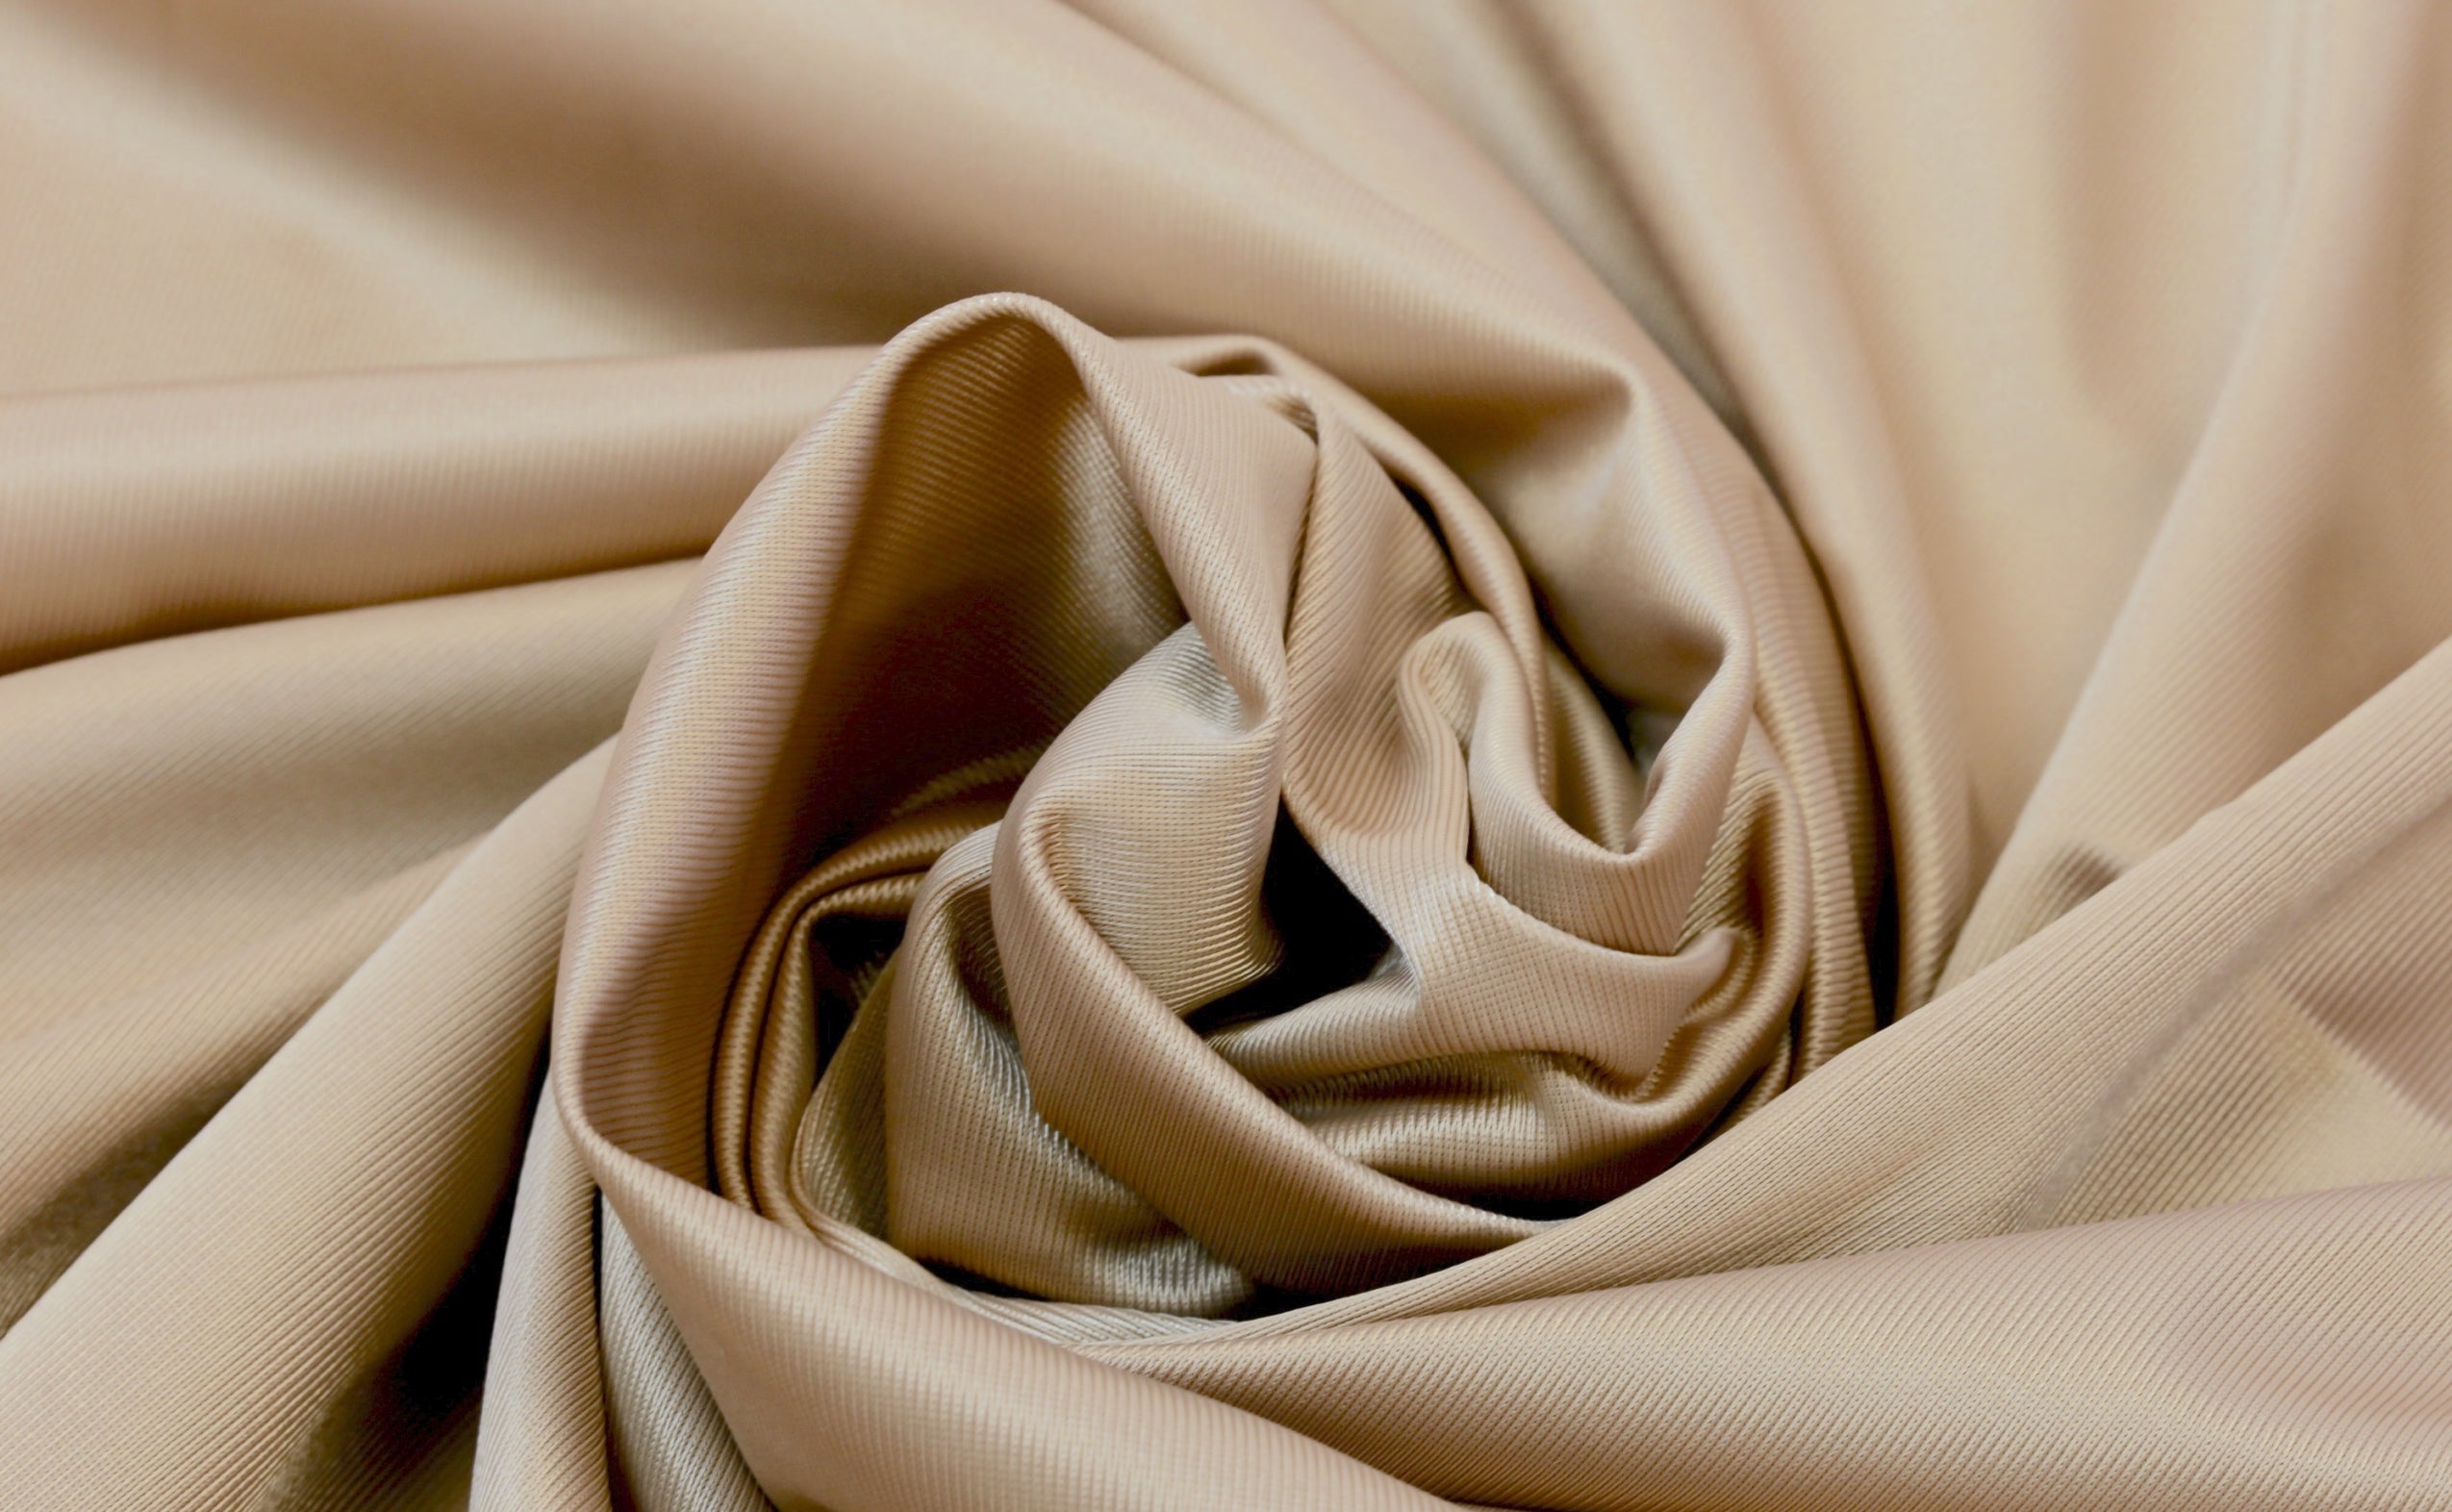 Rubies Bras Stretch Satin fabric in coppr. Close up.